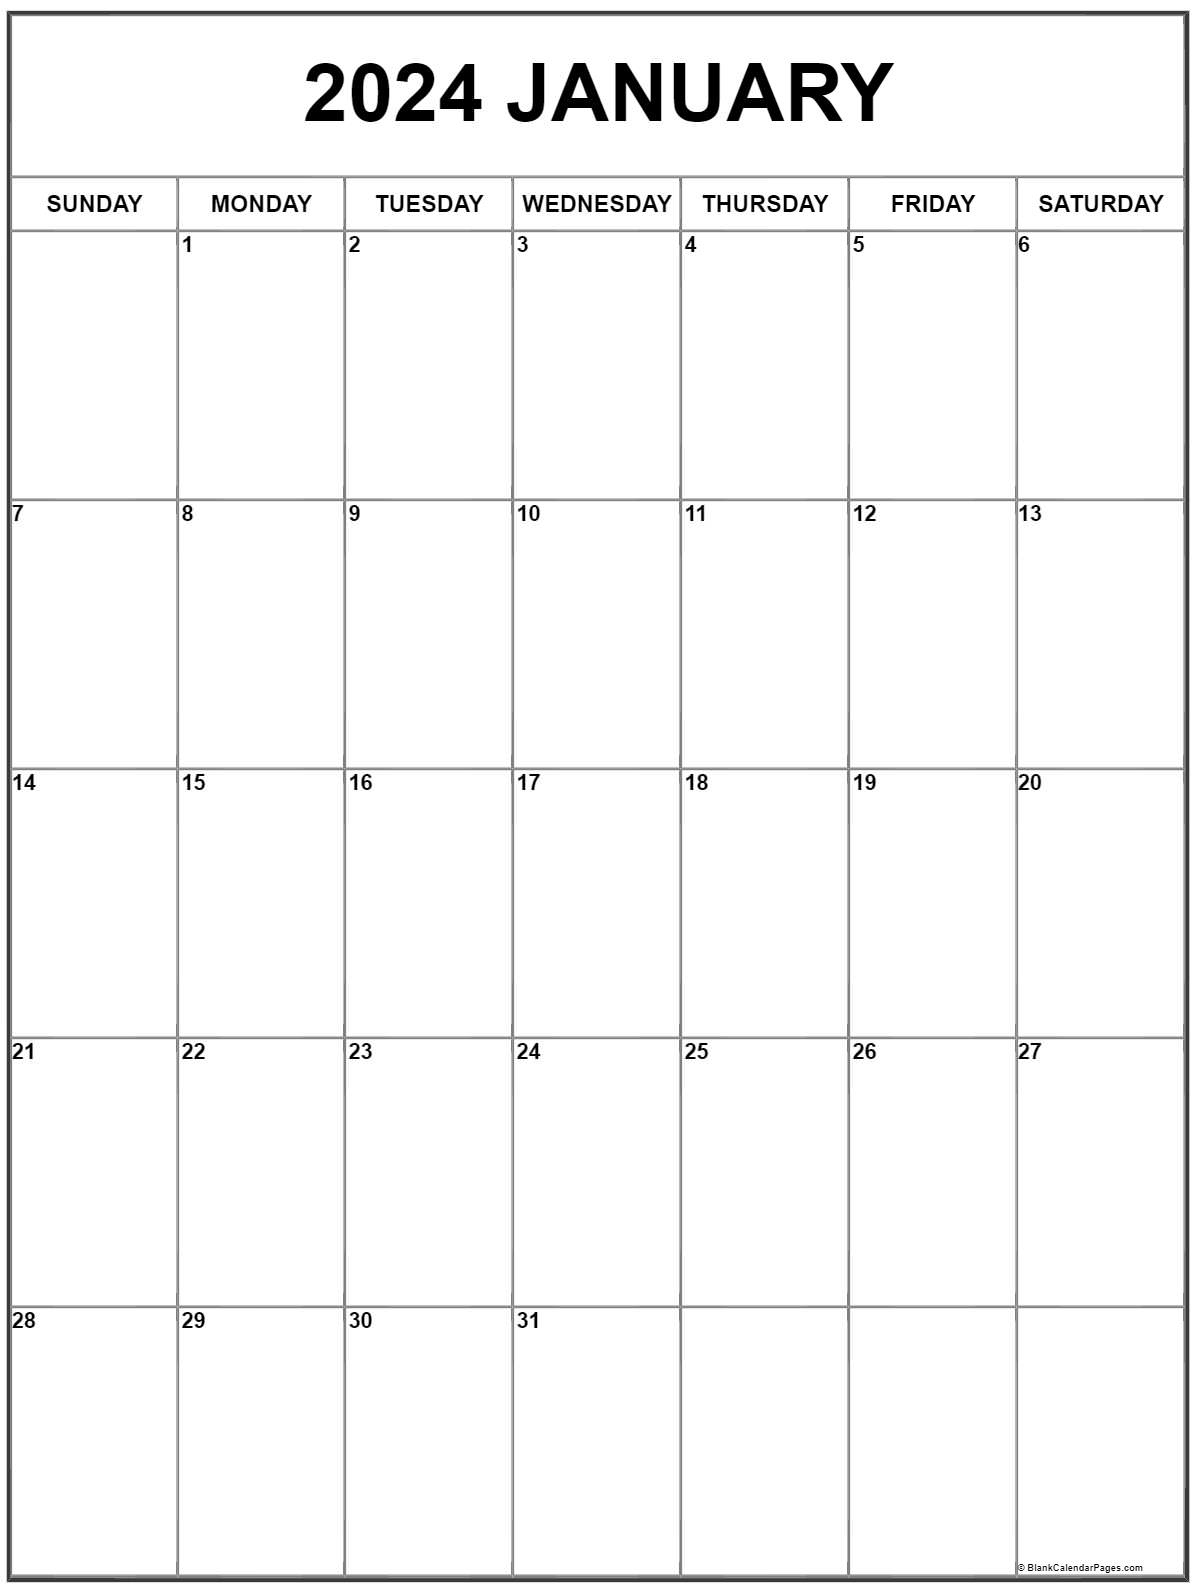 2024 Printable Calendar By Month Vertical Lotti Rhianon - Free Printable 2024 Vertical Tiiny Calendar